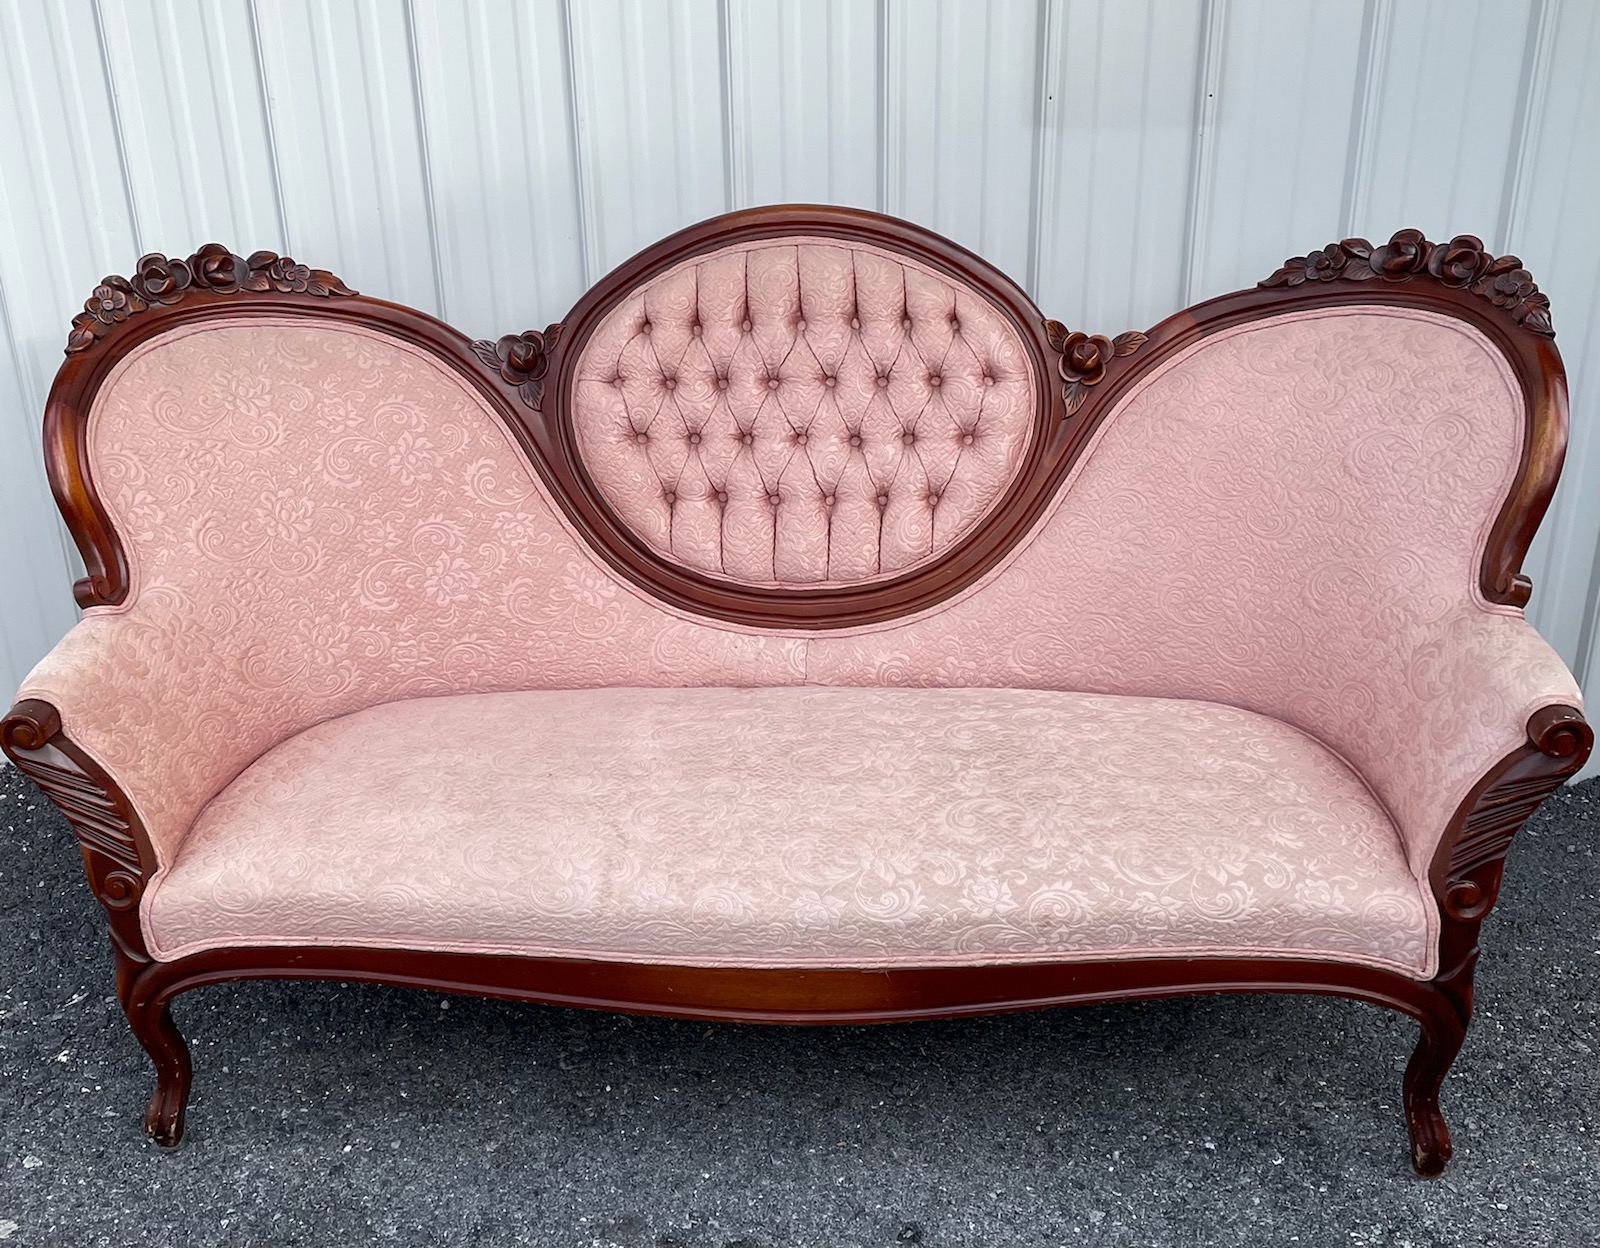 Mount Vesuvius Doctor white Beatrice Blush Vintage Sofa Rental - A to Z Event Rentals, LLC.